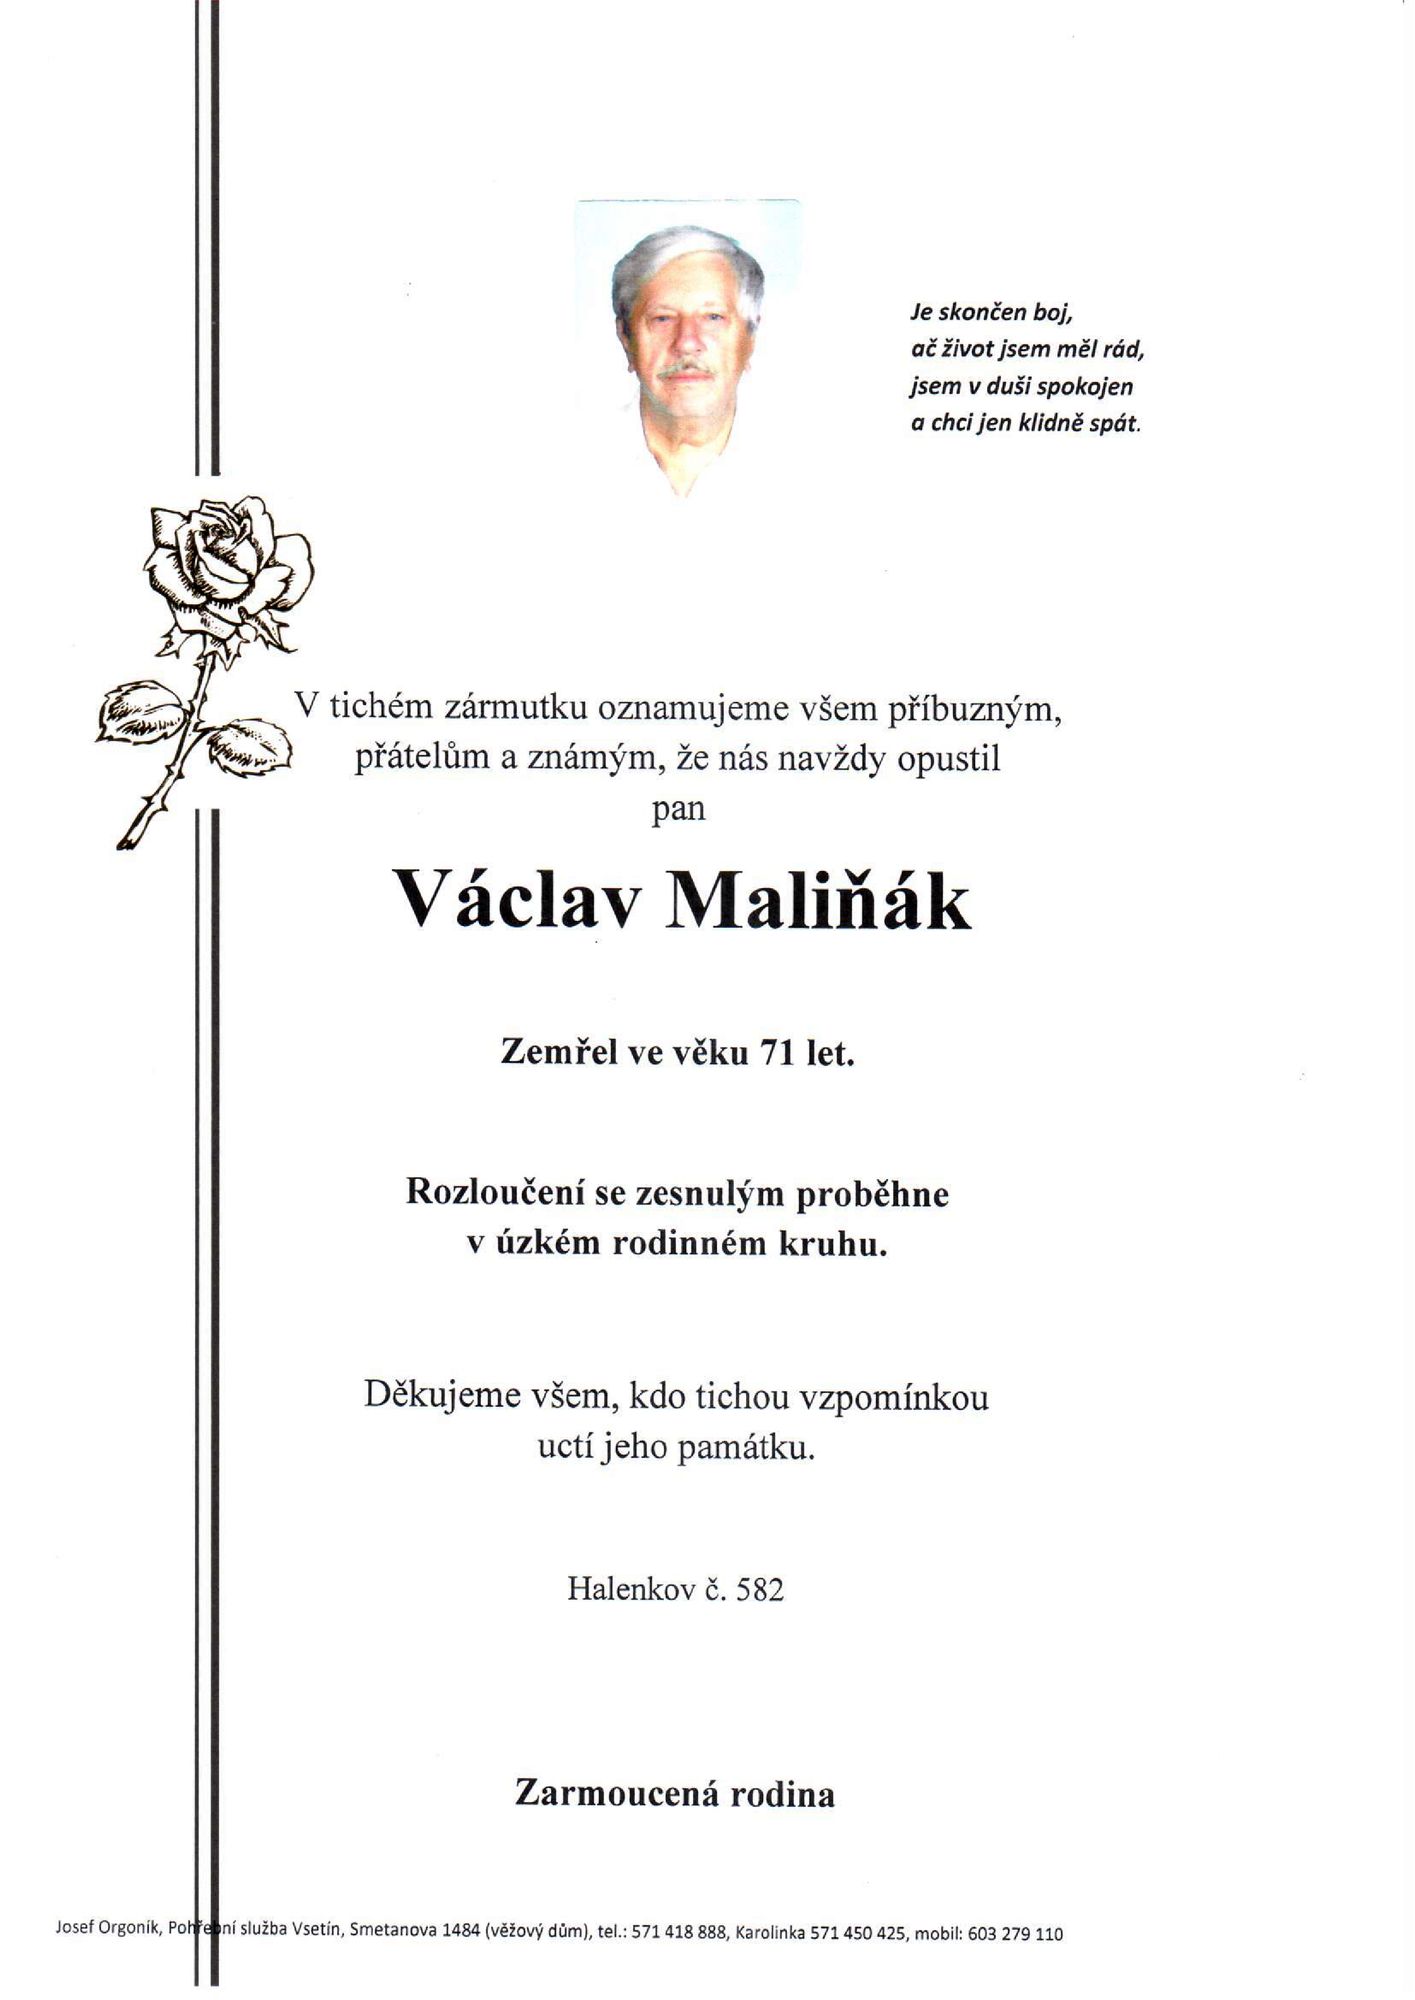 Václav Maliňák